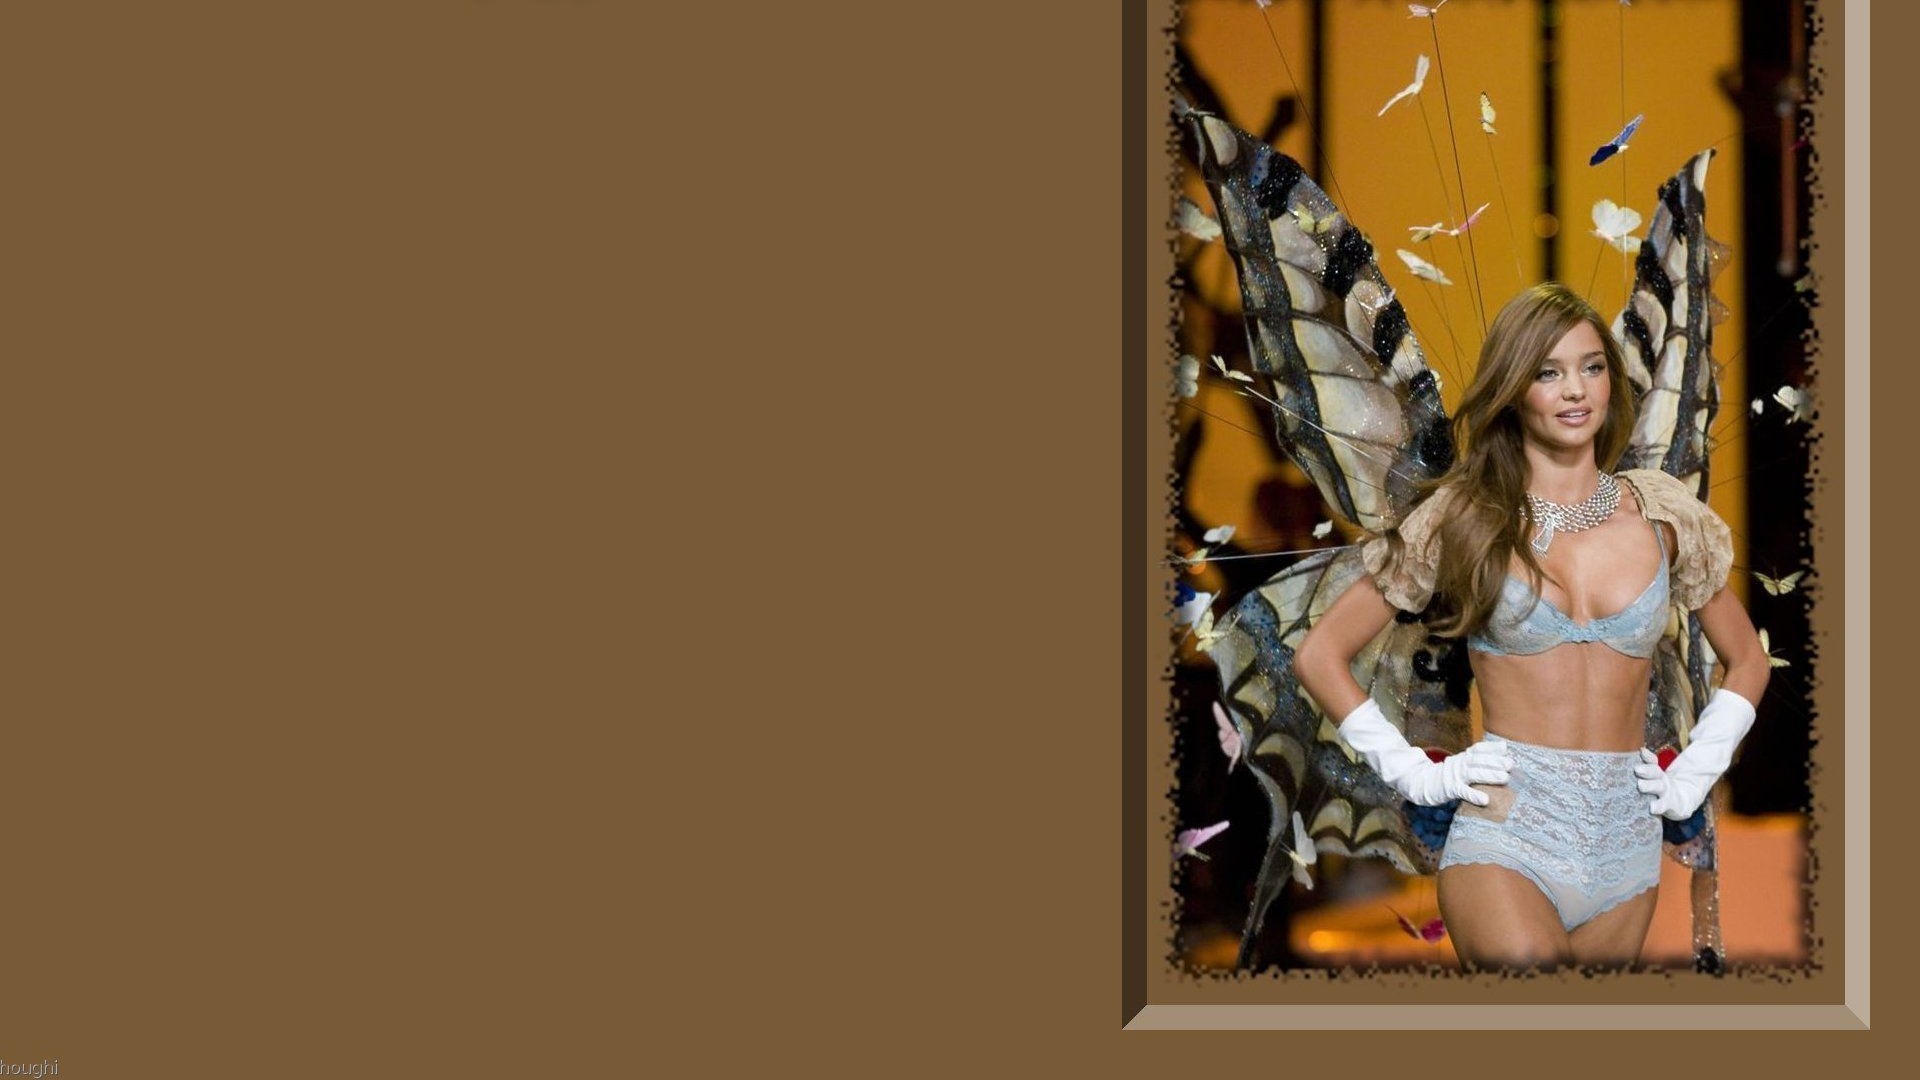 Miranda Kerr #012 - 1920x1080 Wallpapers Pictures Photos Images